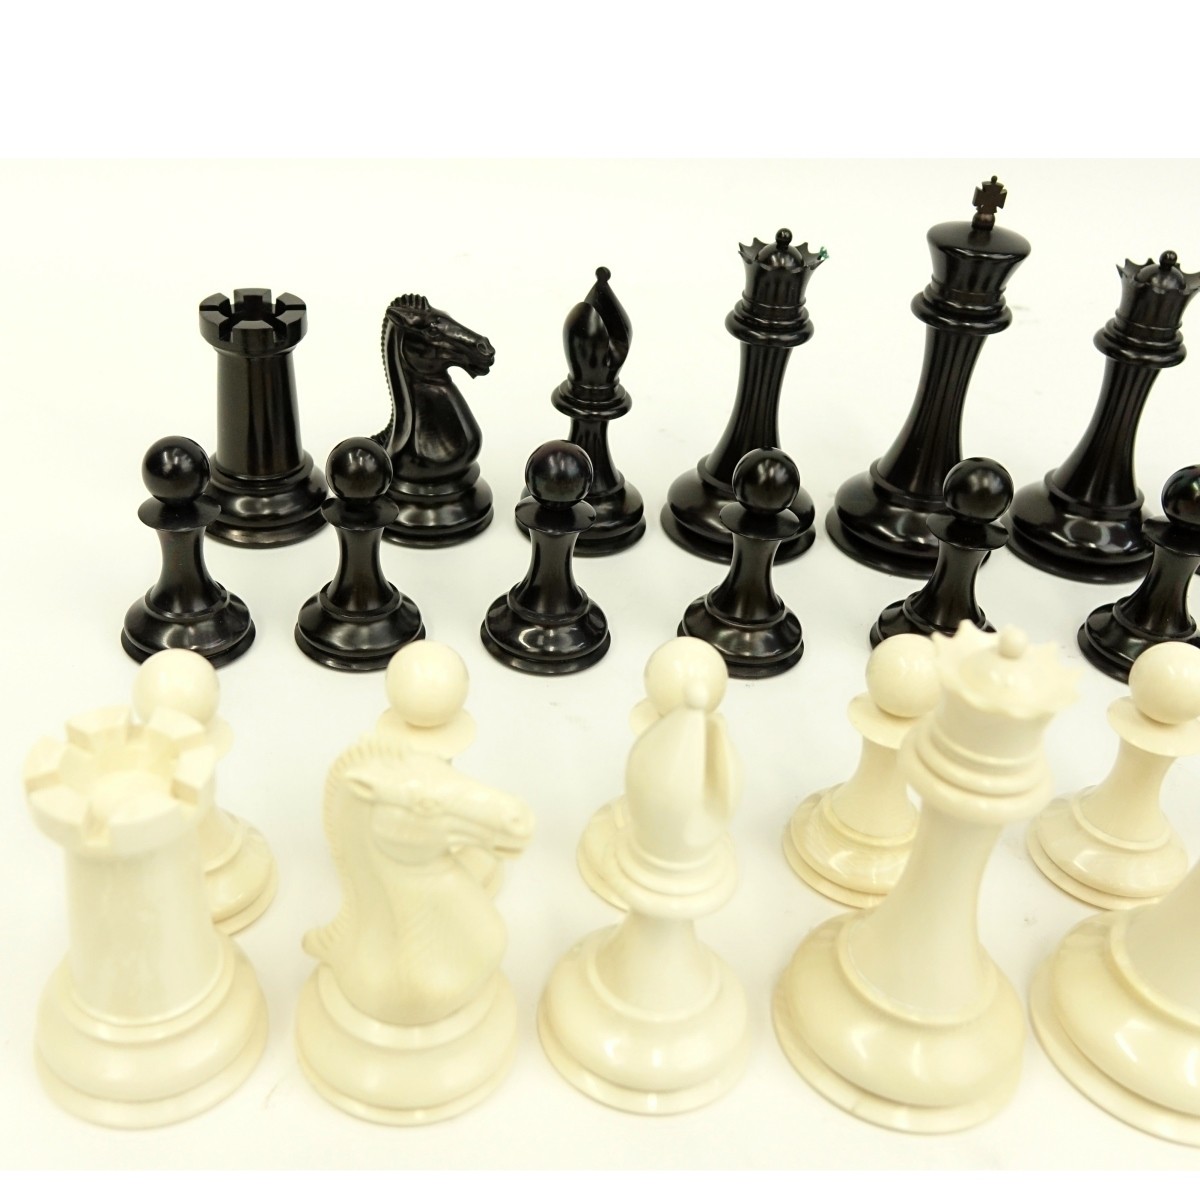 House Of Staunton Ivory Chess Set